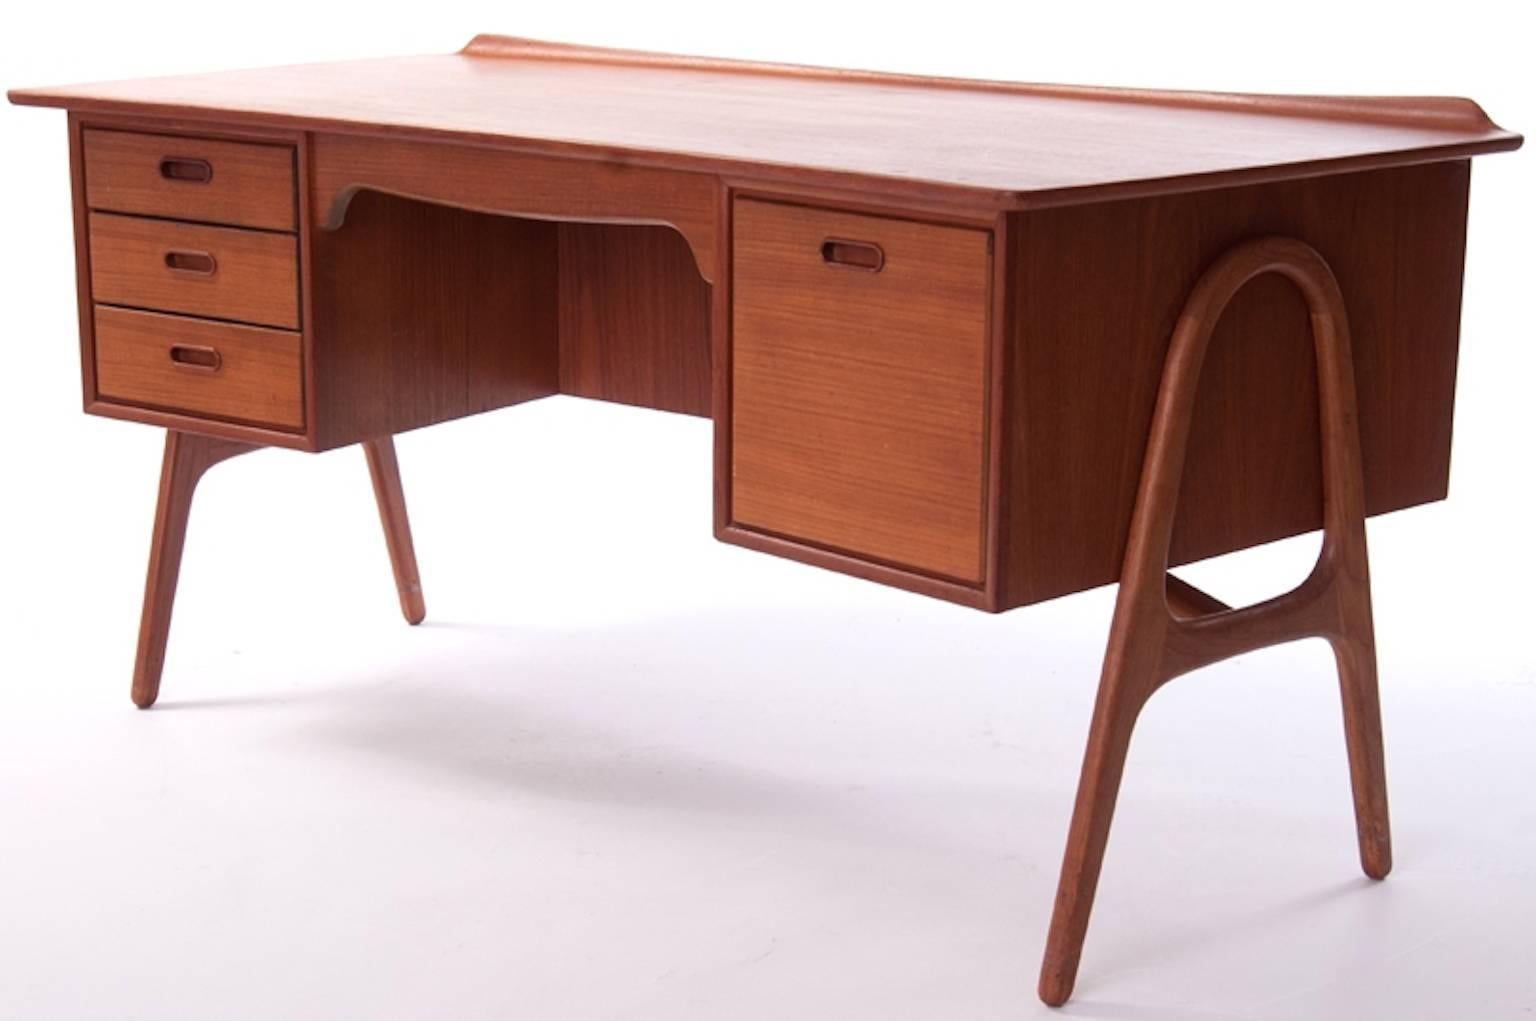 Vintage Danish Modern Desk by Svend Madsen. In teak. Beautiful vintage condition pieces.

